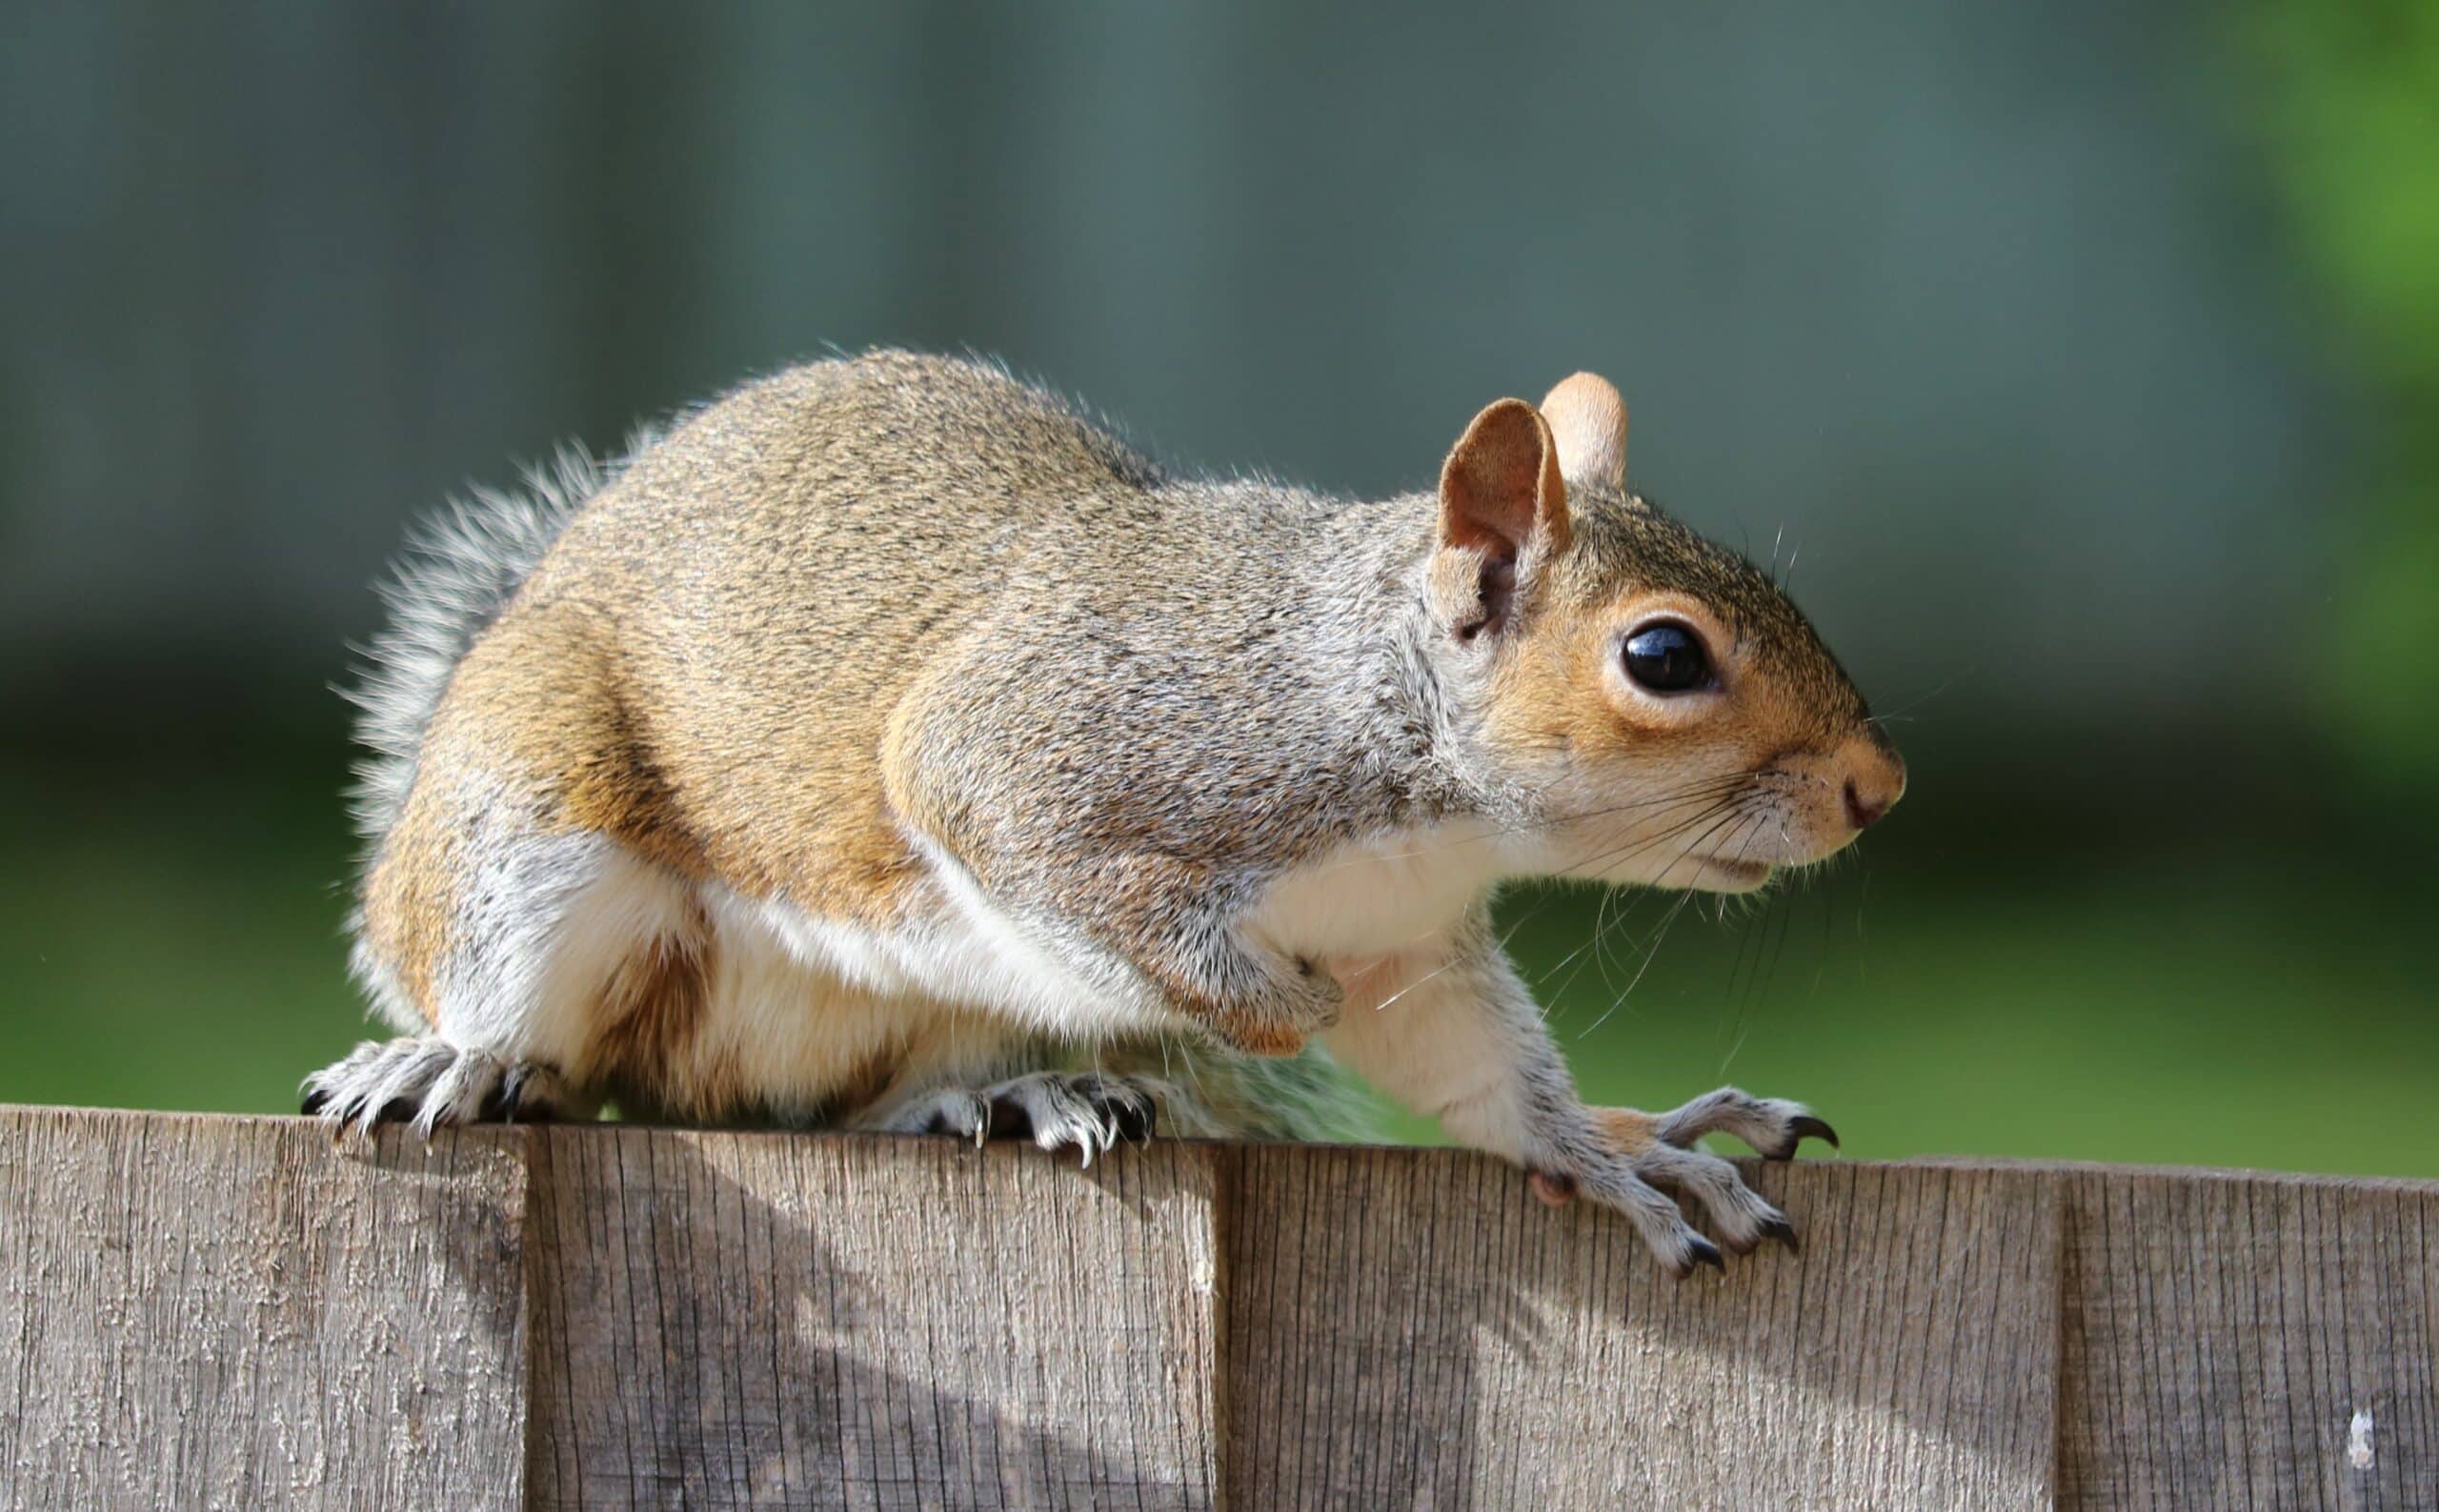 How To Get Rid of Squirrels in Attics